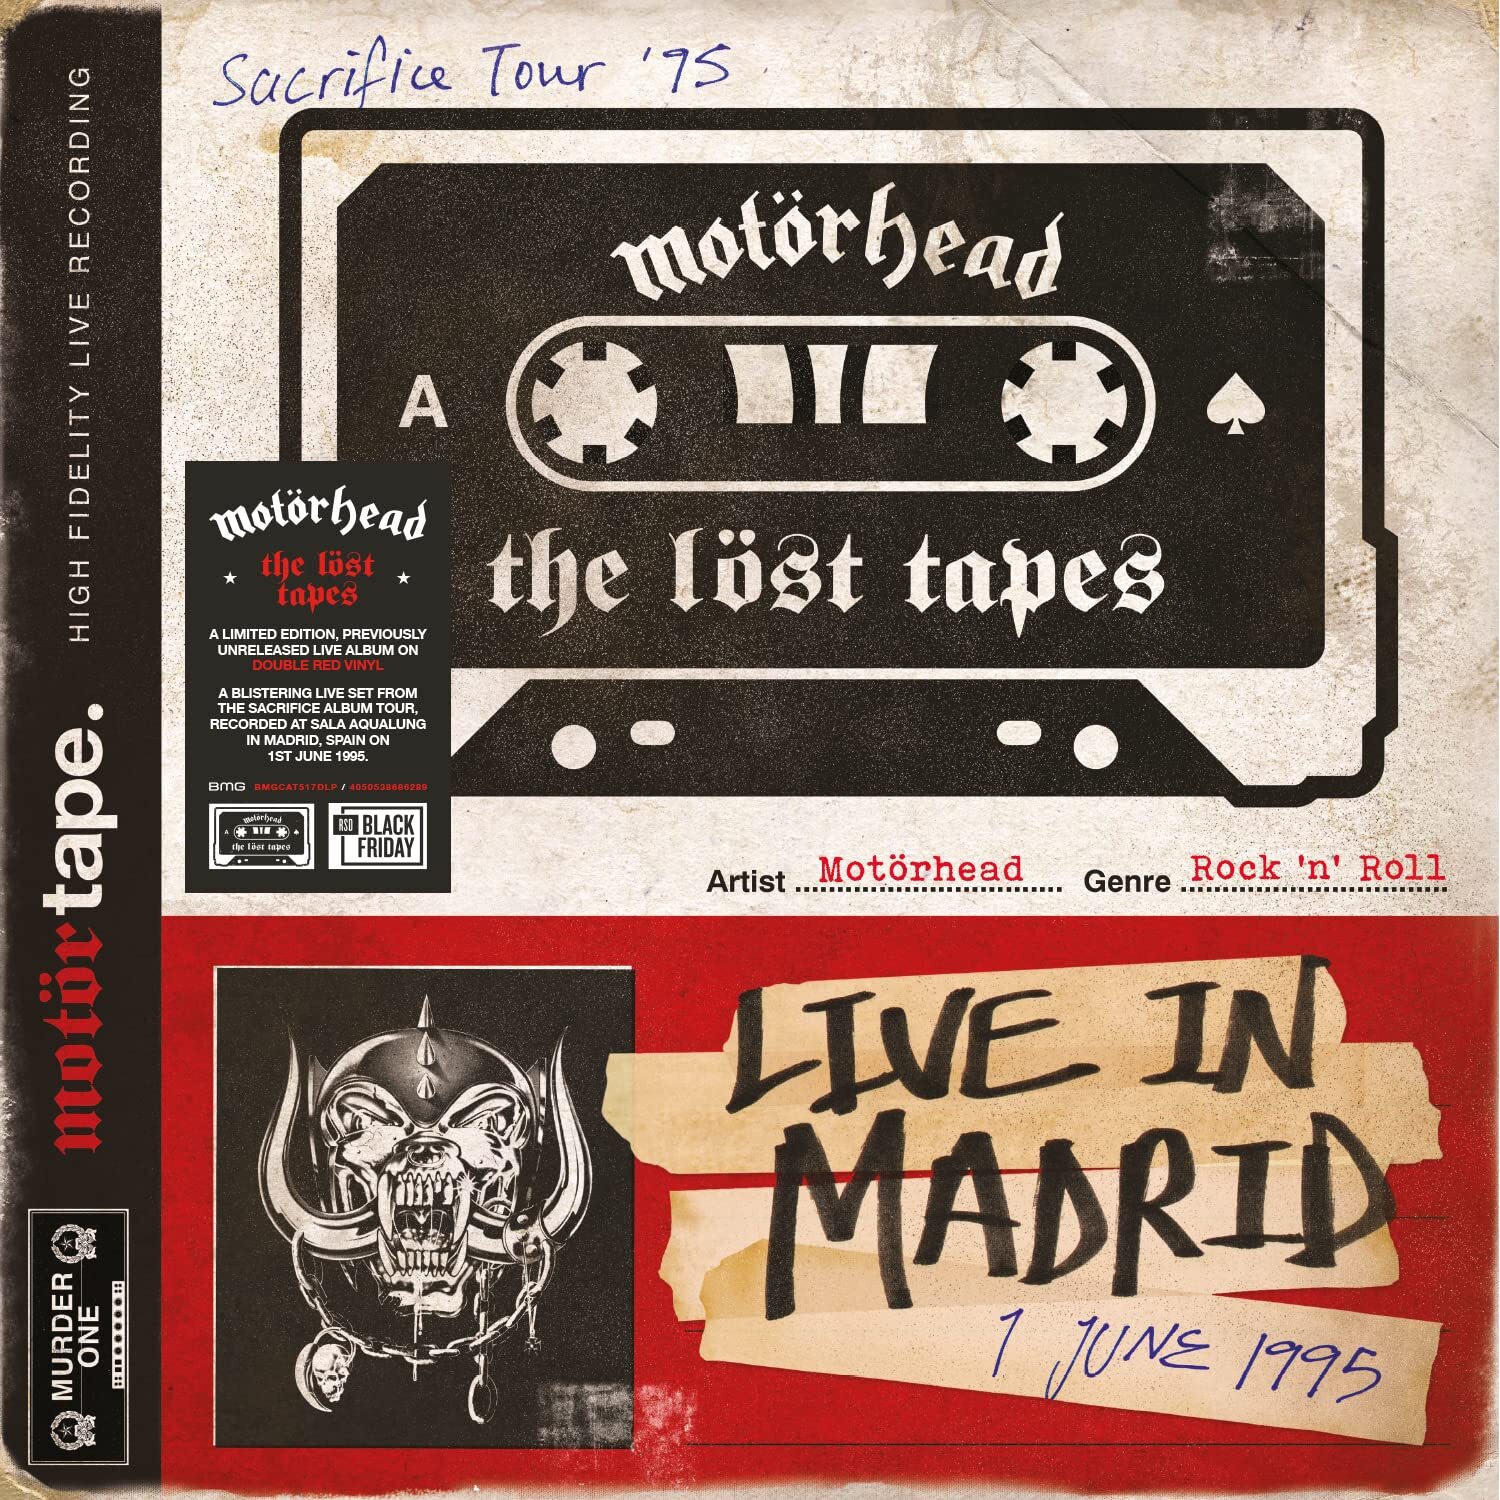 Рок Warner Music Motorhead - The Lost Tapes Vol. 1 Live In Madrid 1 June 1995 (Limited Edition Coloured Vinyl 2LP) хип хоп wm nothing nowhere void eternal coloured